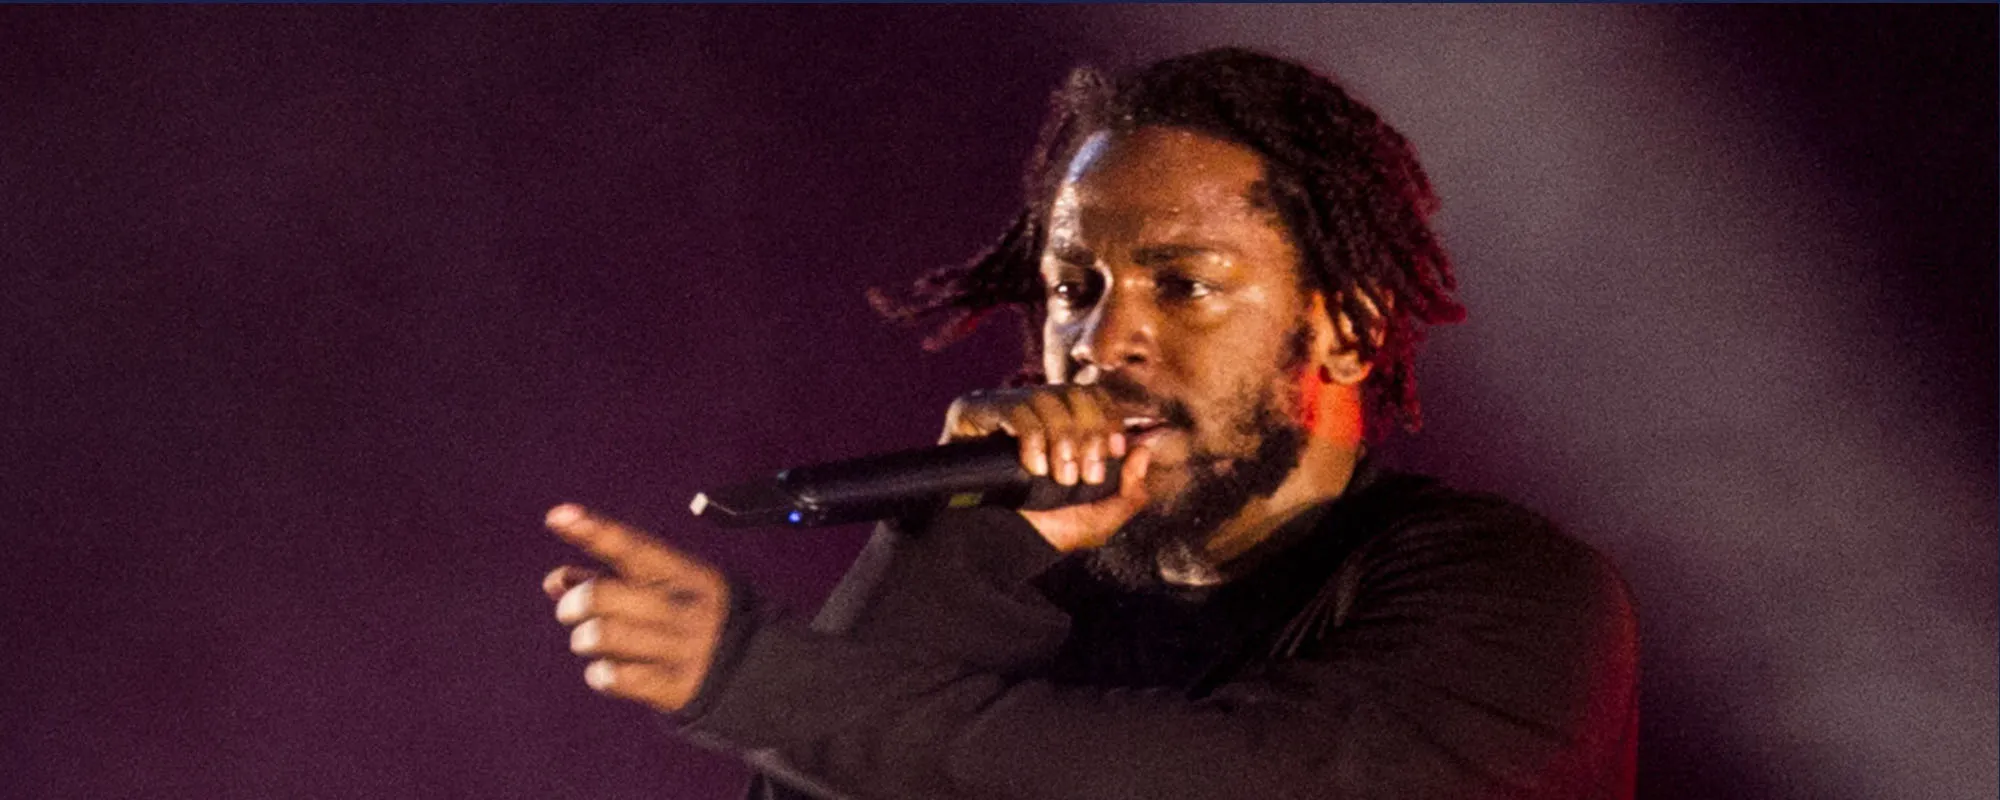 Kendrick Lamar’s “LOVE” Reaches 1 Billion Spotify Streams